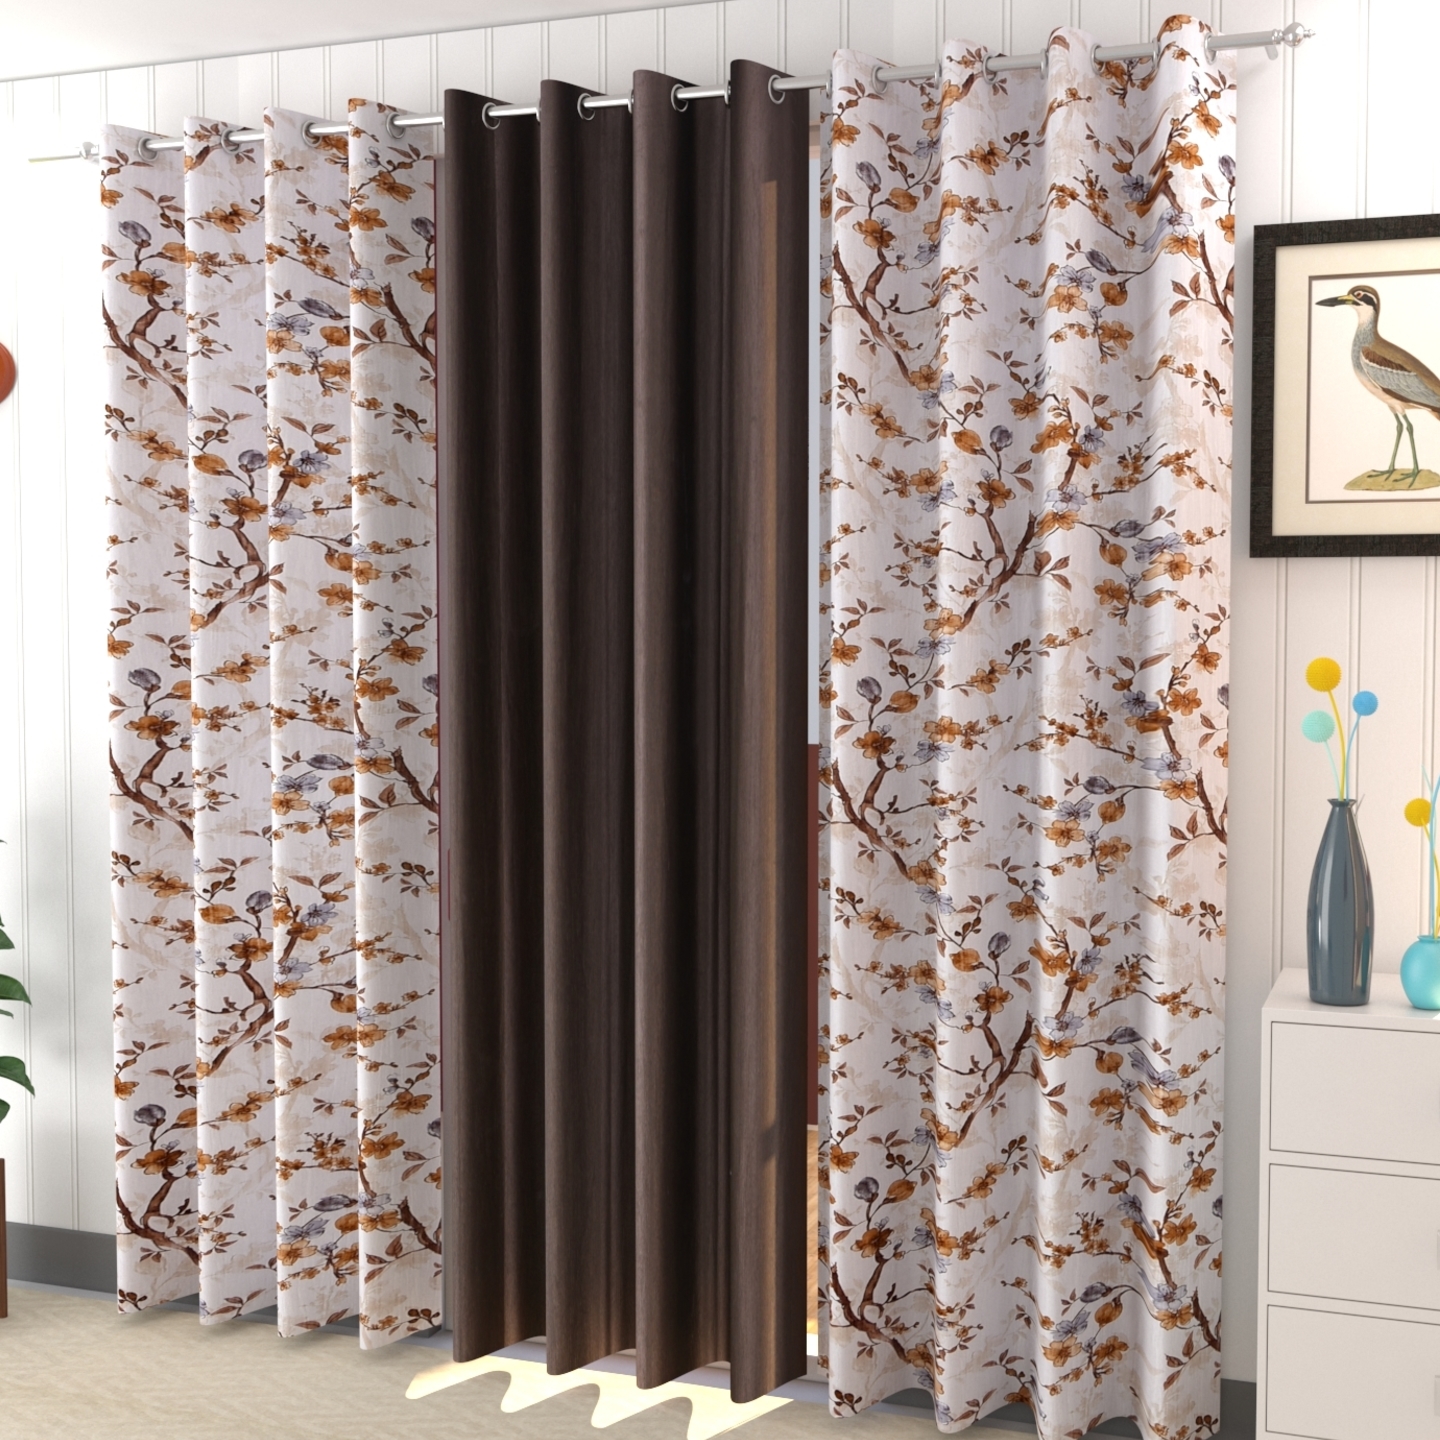 Handtex Home Polyester Digital Print Eyelet Curtain Set of 3 Pcs 4feet x 7feet Coffee